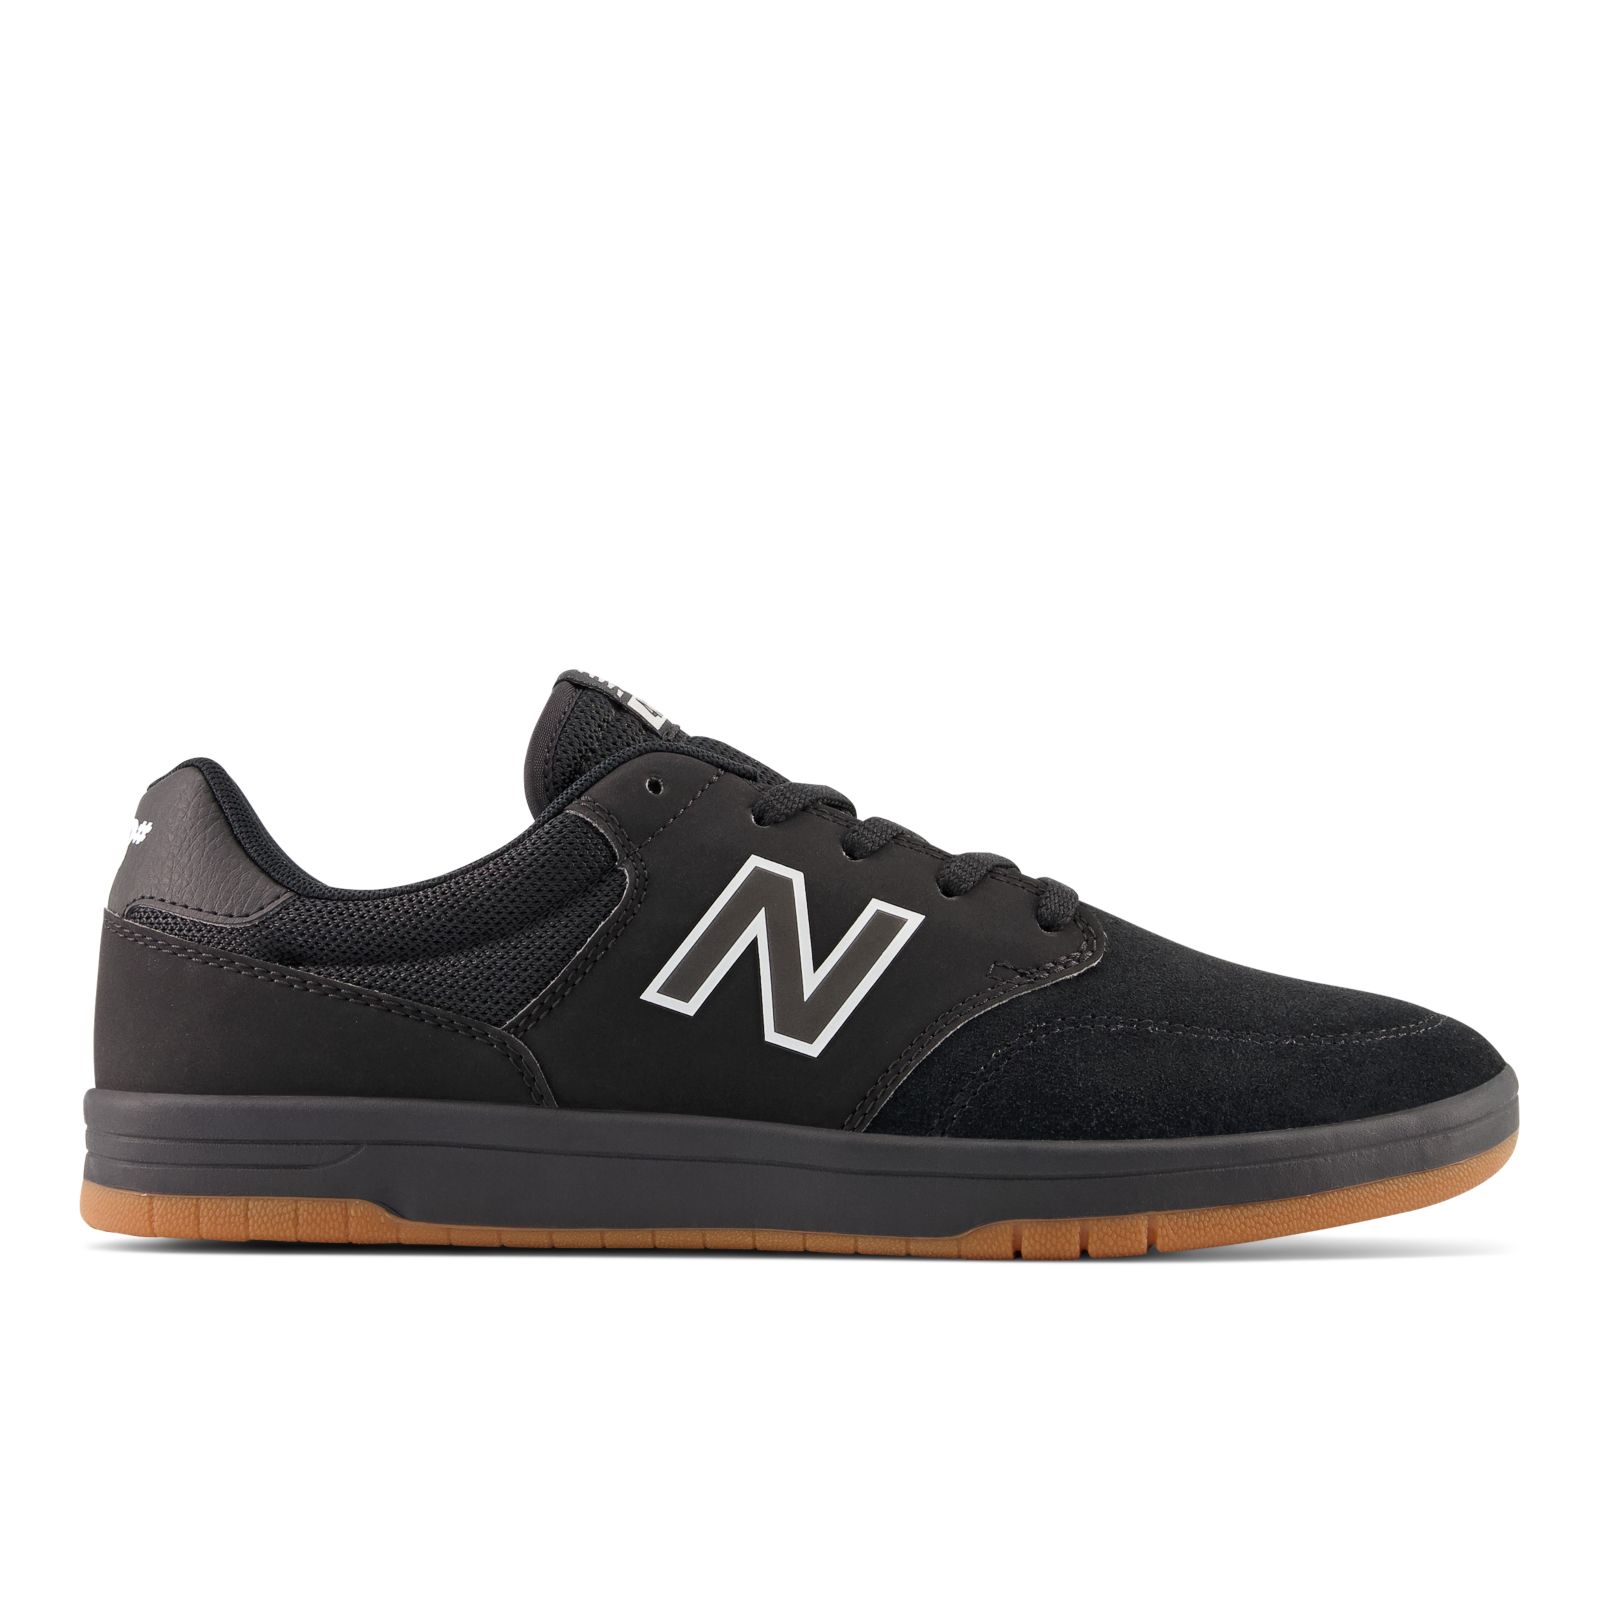 NB Numeric 425 - New Balance